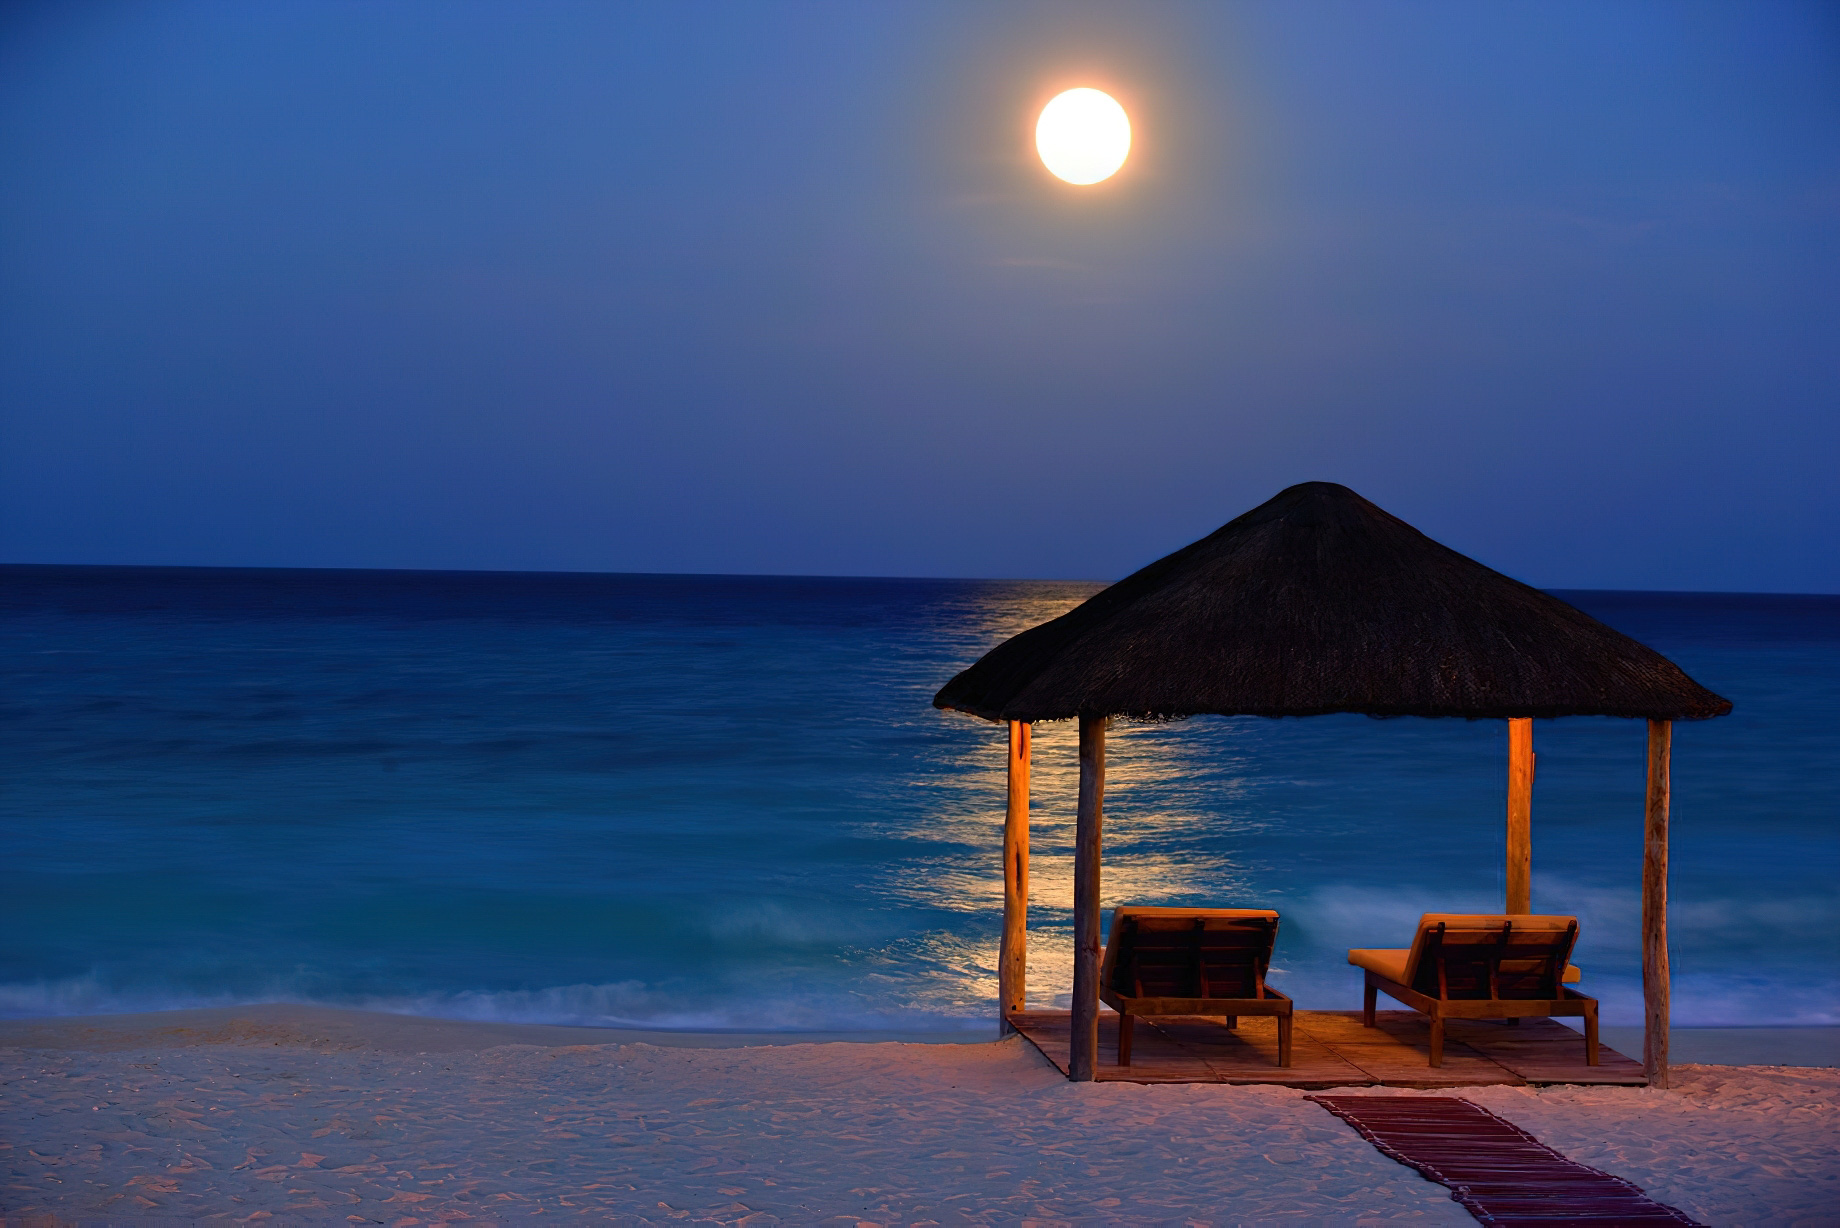 The Ritz-Carlton, Cancun Resort - Cancun, Mexico - Beachfront Cabana Night Moon View